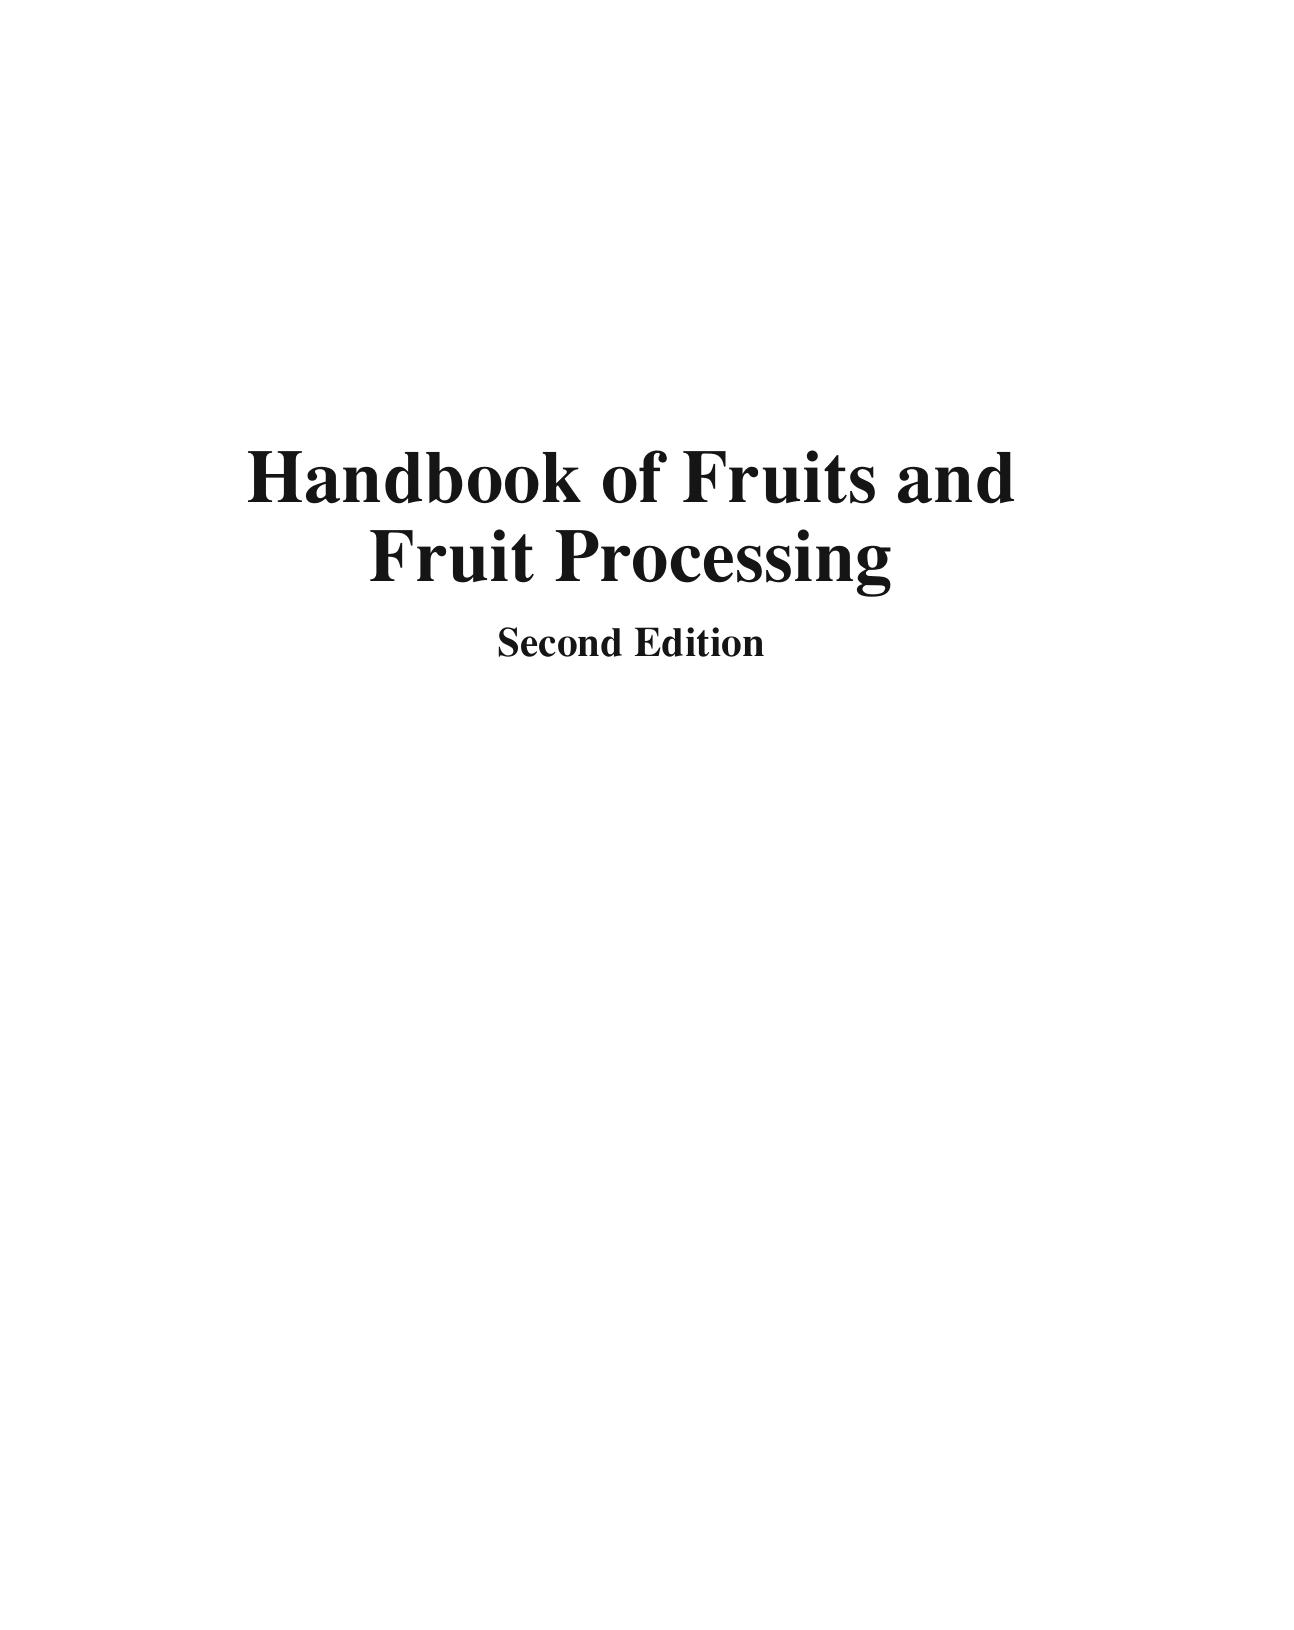 Handbook of fruits & fruit processing, 2nd ed